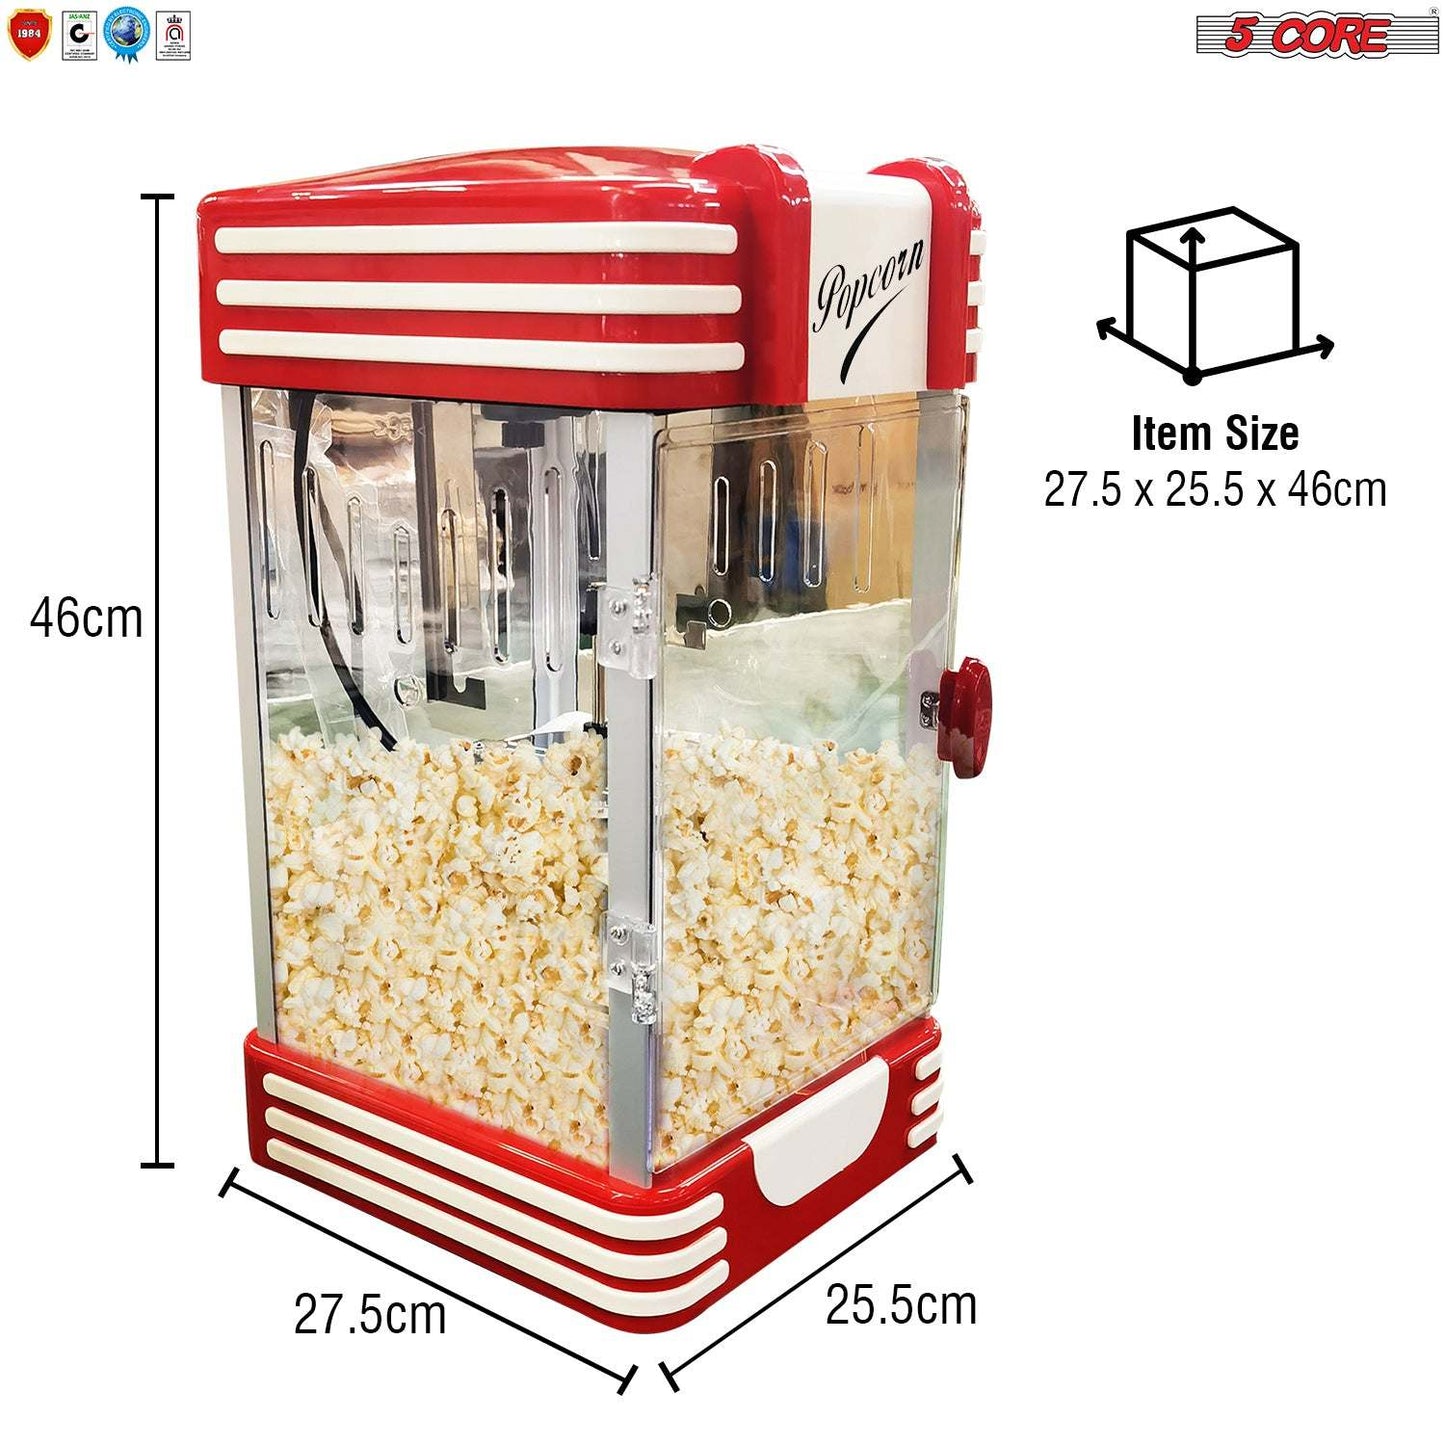 5 Core Popcorn Machine Popcorn Maker Machine used in Home Movie Theater Style Popcorn Popper 4 Oz Antique 300 Watts Big Grande Size - POP 850